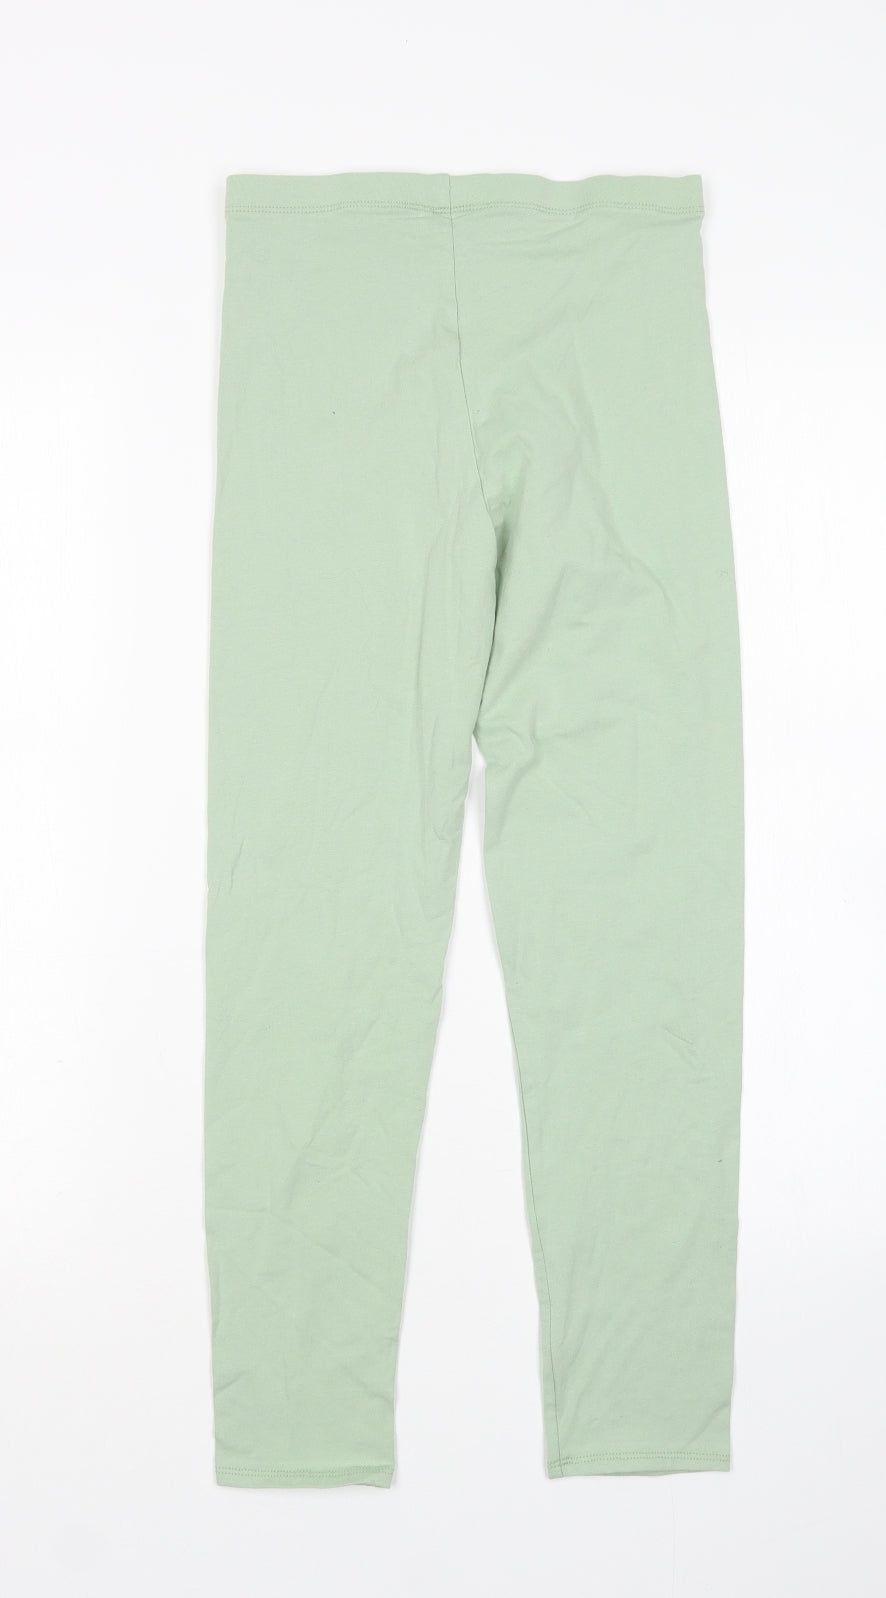 George Girls Green  Cotton Sweatpants Trousers Size 12-13 Years  Regular  - Leggings